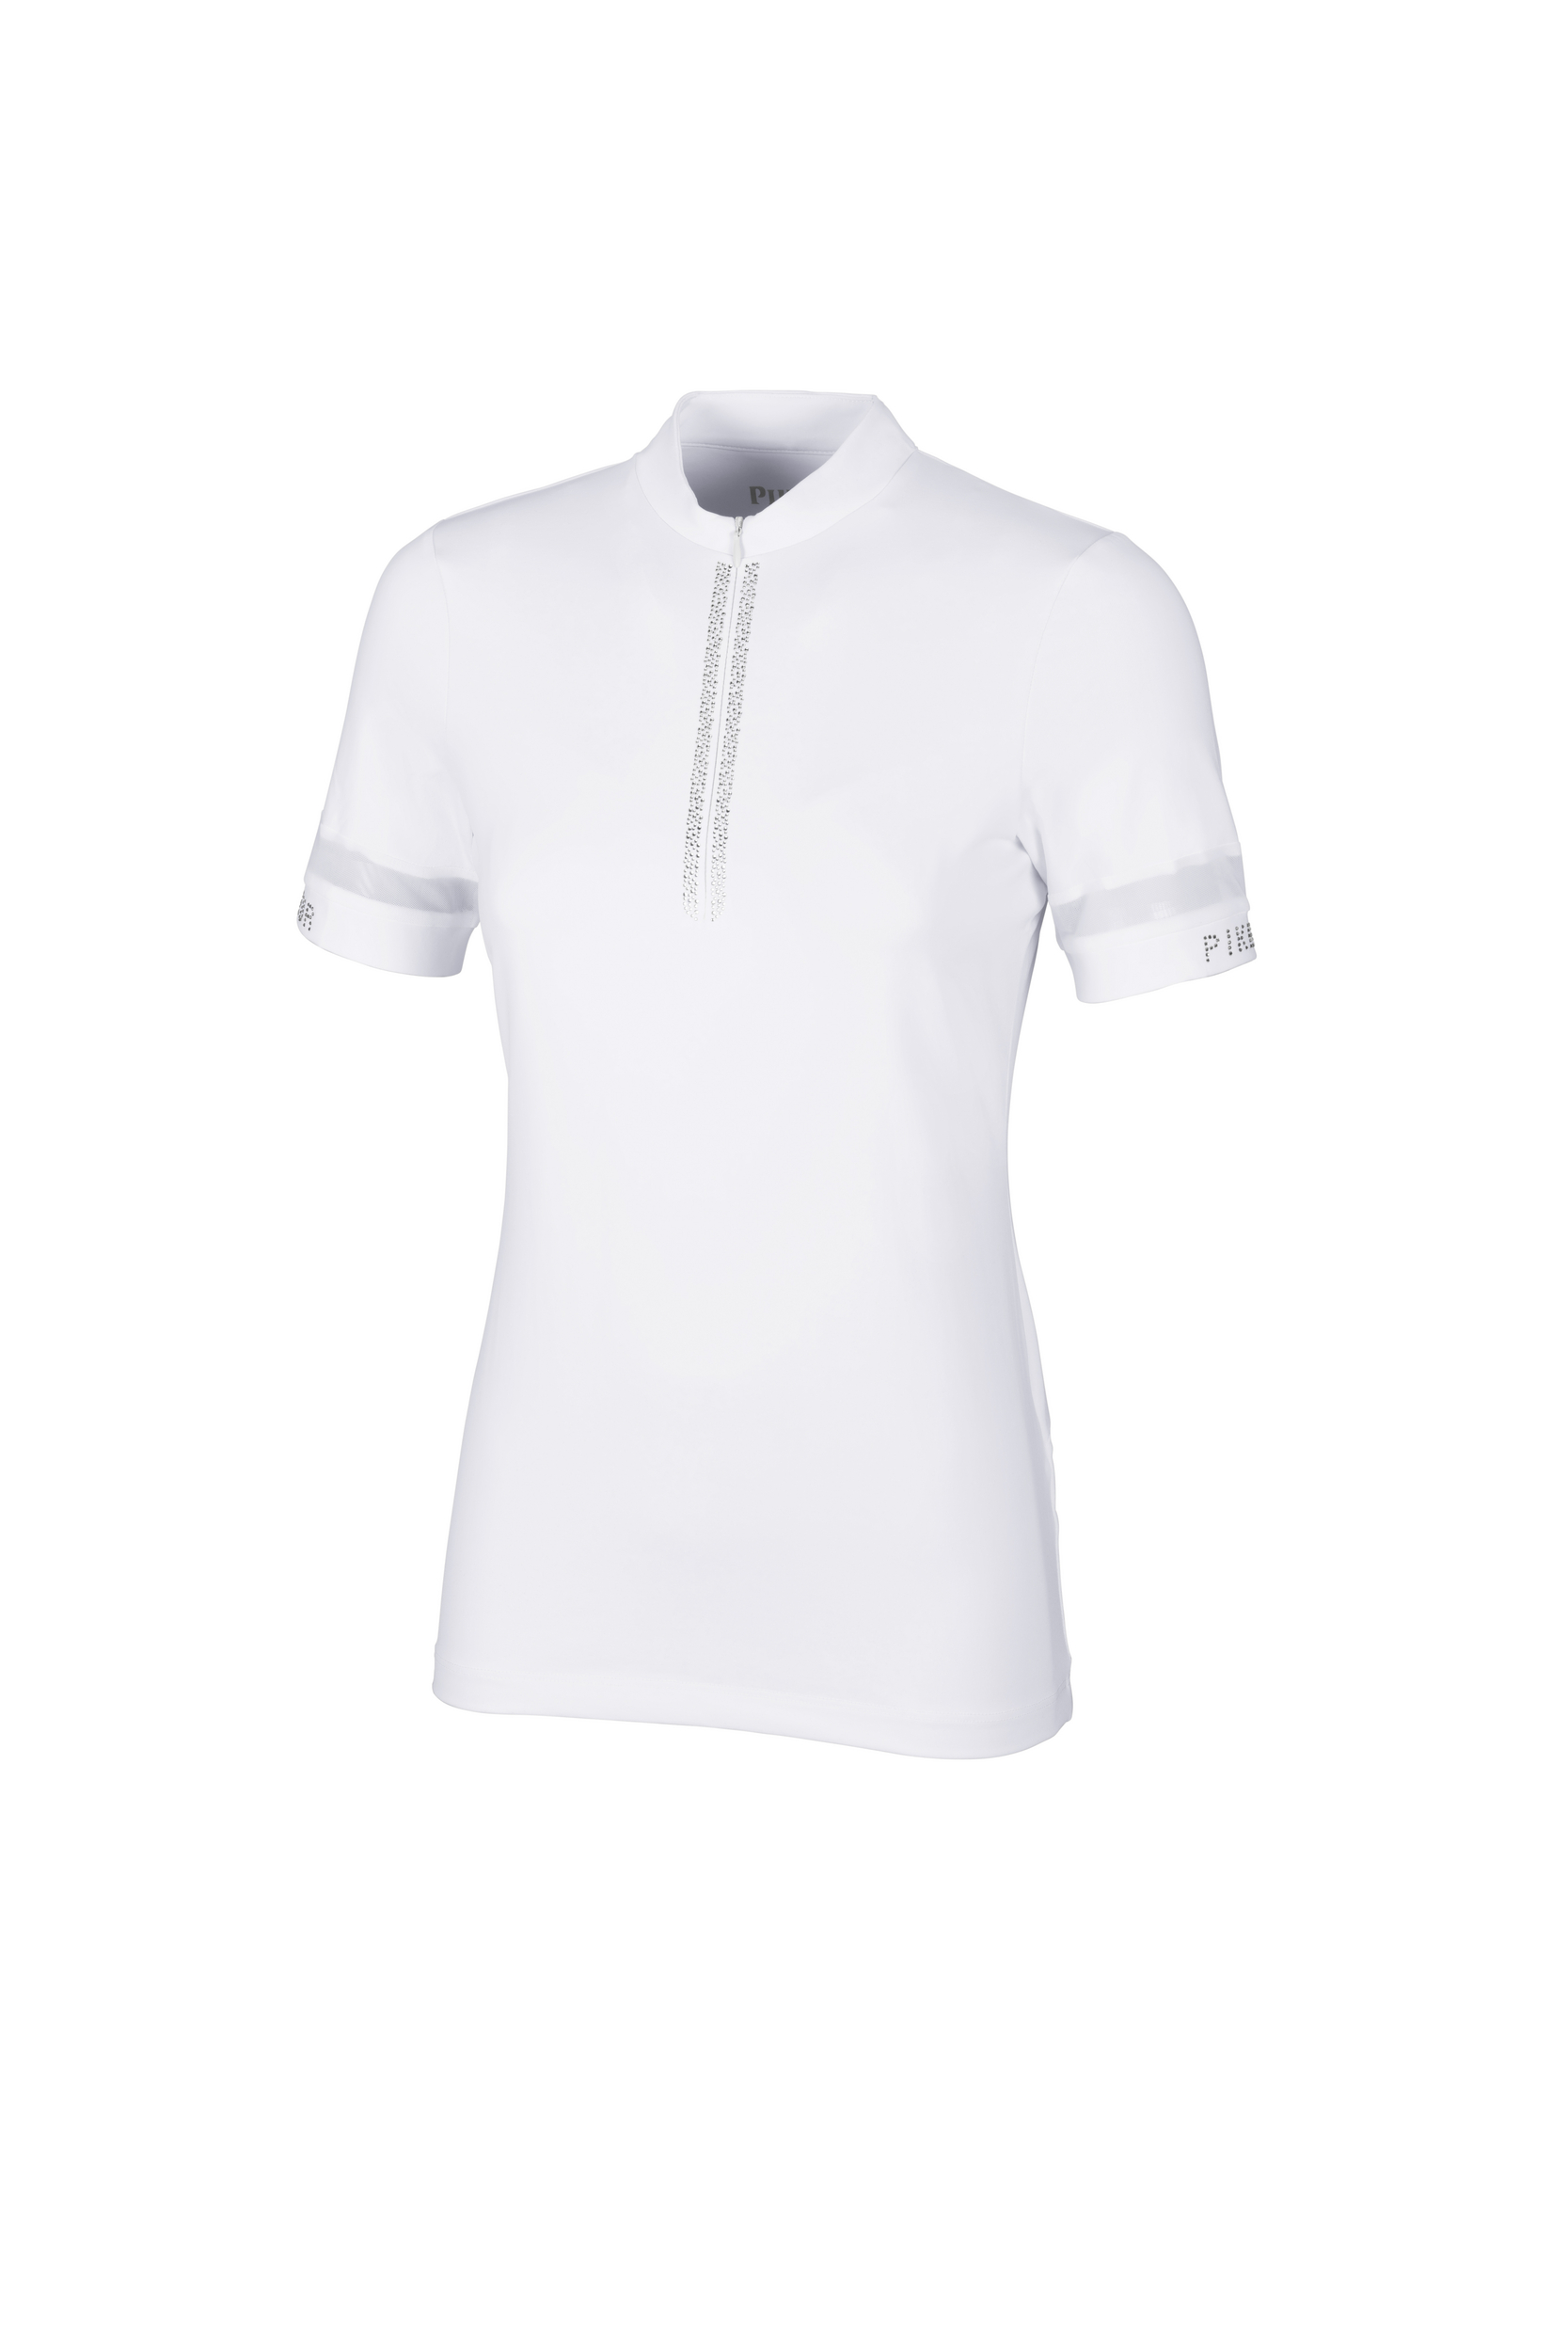 PIKEUR Damen Zip Shirt Kurzarm 5210 Selection 24 - white - 34 - 2